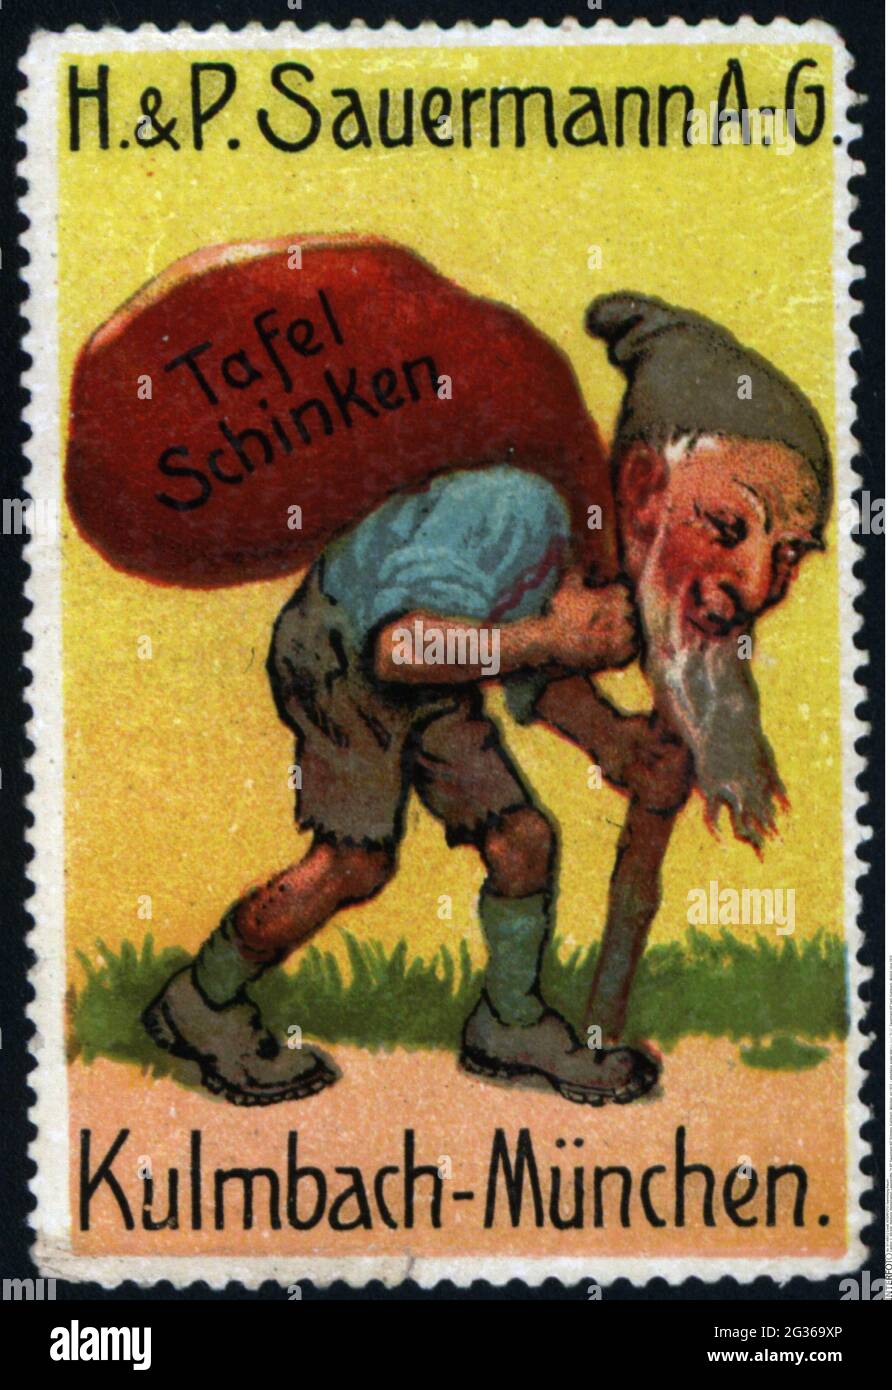 Werbung, Plakat Briefmarken, Lebensmittel, 'H.&P. Sauermann AG' HAM,  Kulmbach - München, um 1910,  ZUSÄTZLICHE-RIGHTS-CLEARANCE-INFO-NOT-AVAILABLE Stockfotografie - Alamy